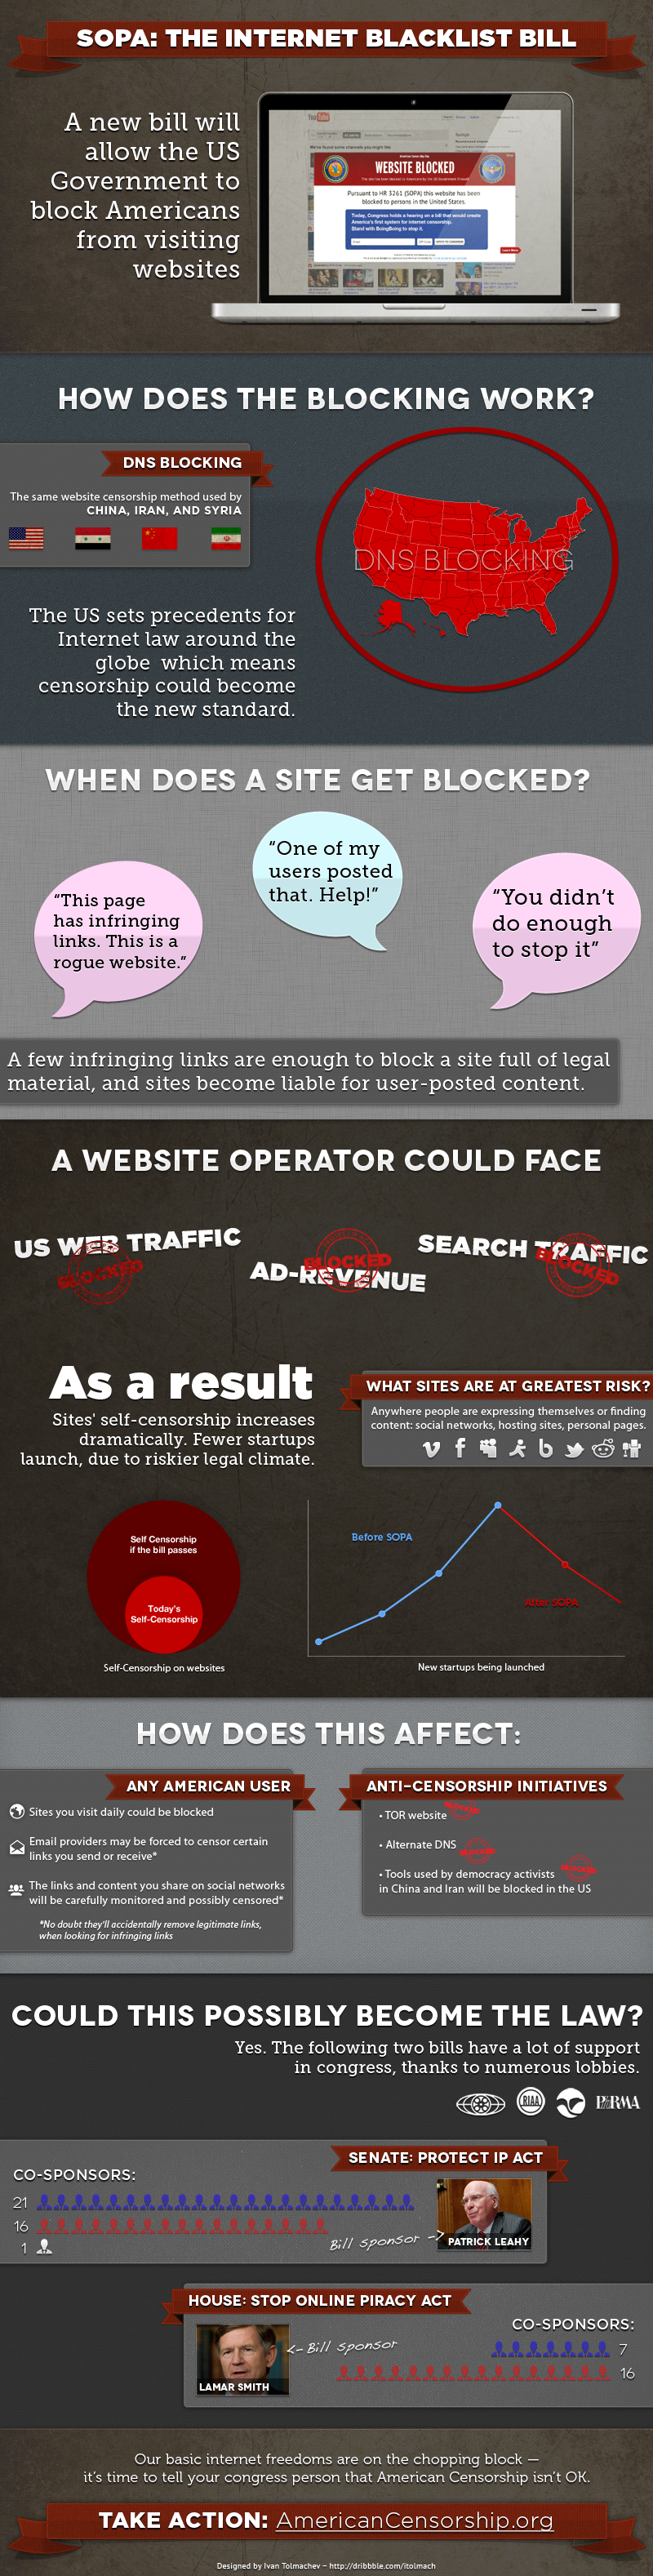 sopa infographic